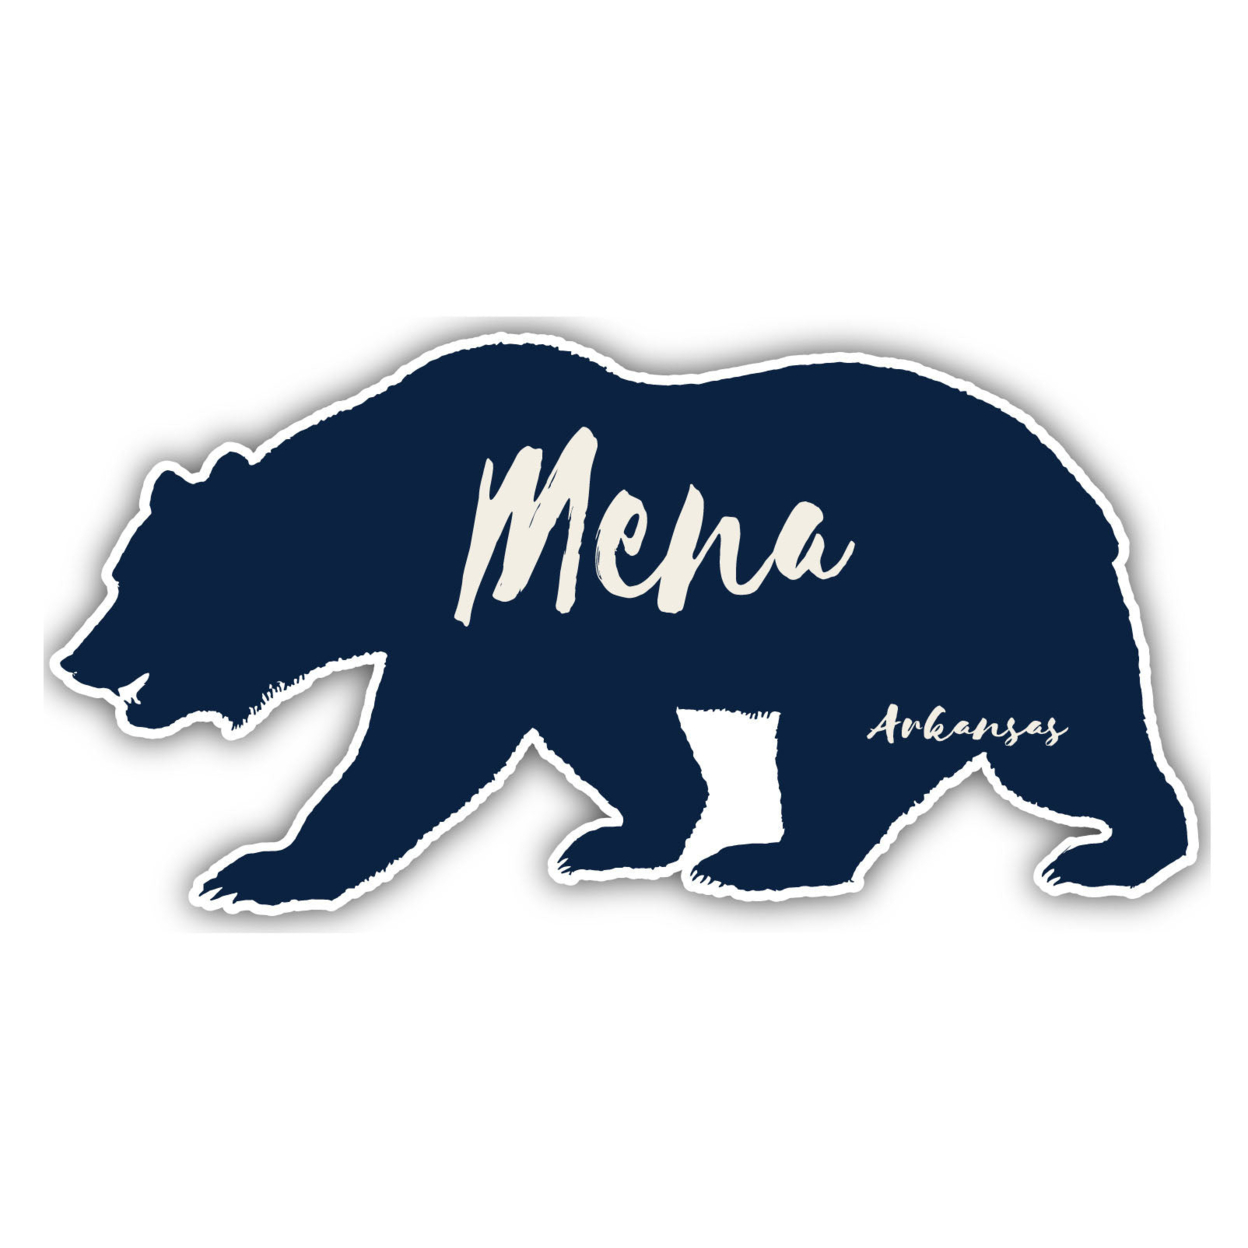 Mena Arkansas Souvenir Decorative Stickers (Choose Theme And Size) - 4-Inch, Bear